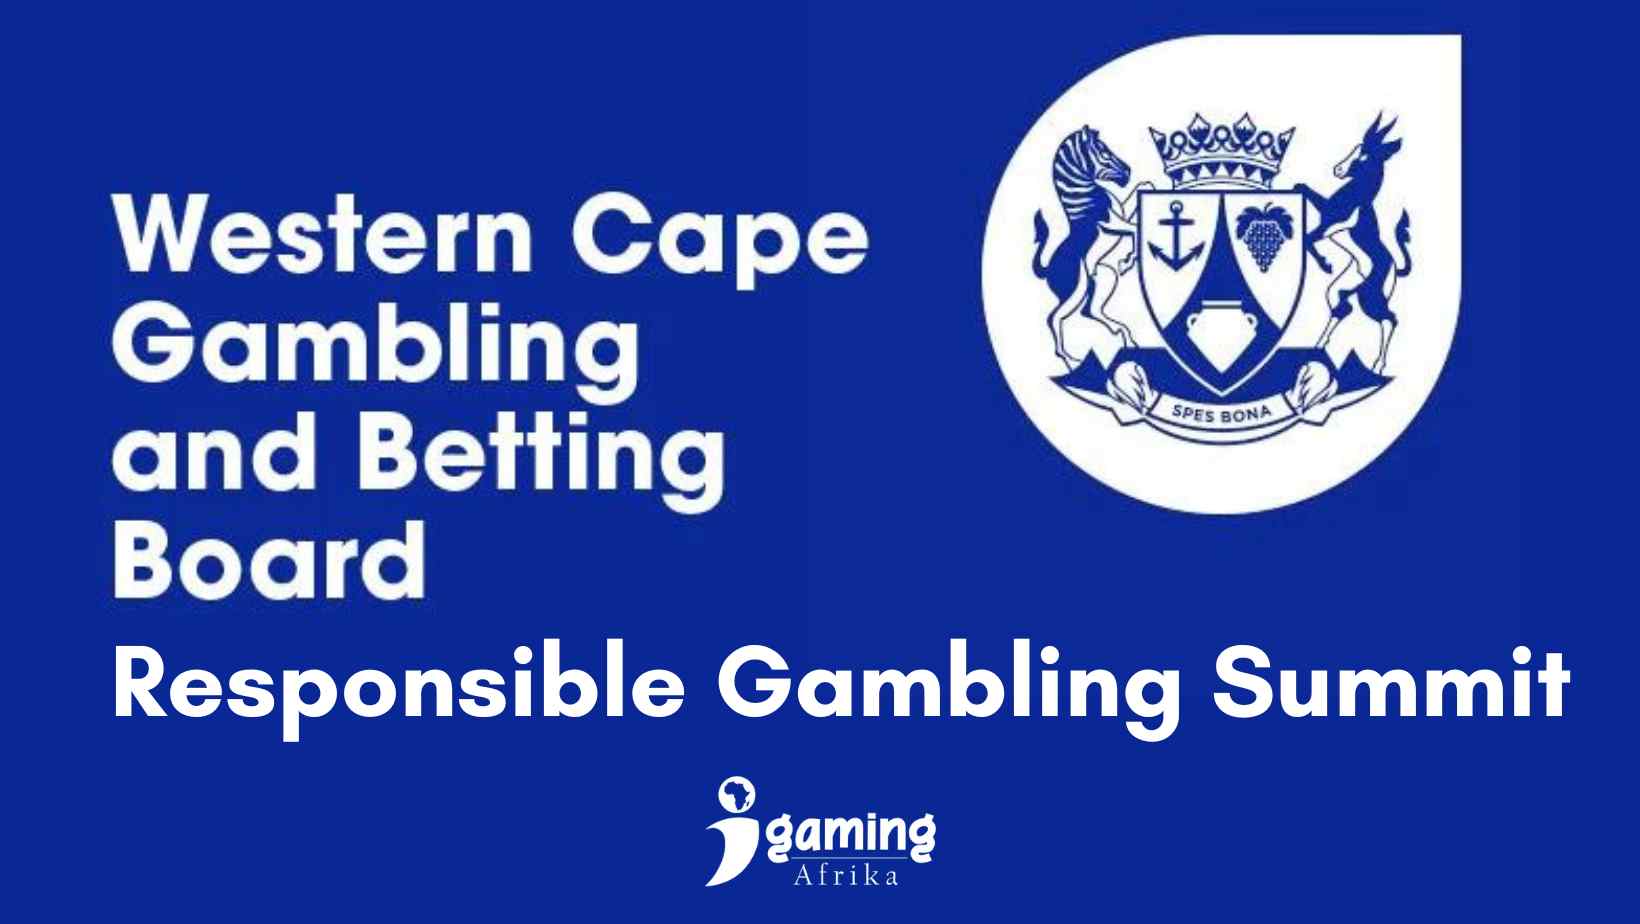 Western Cape Responsible Gambling Summit